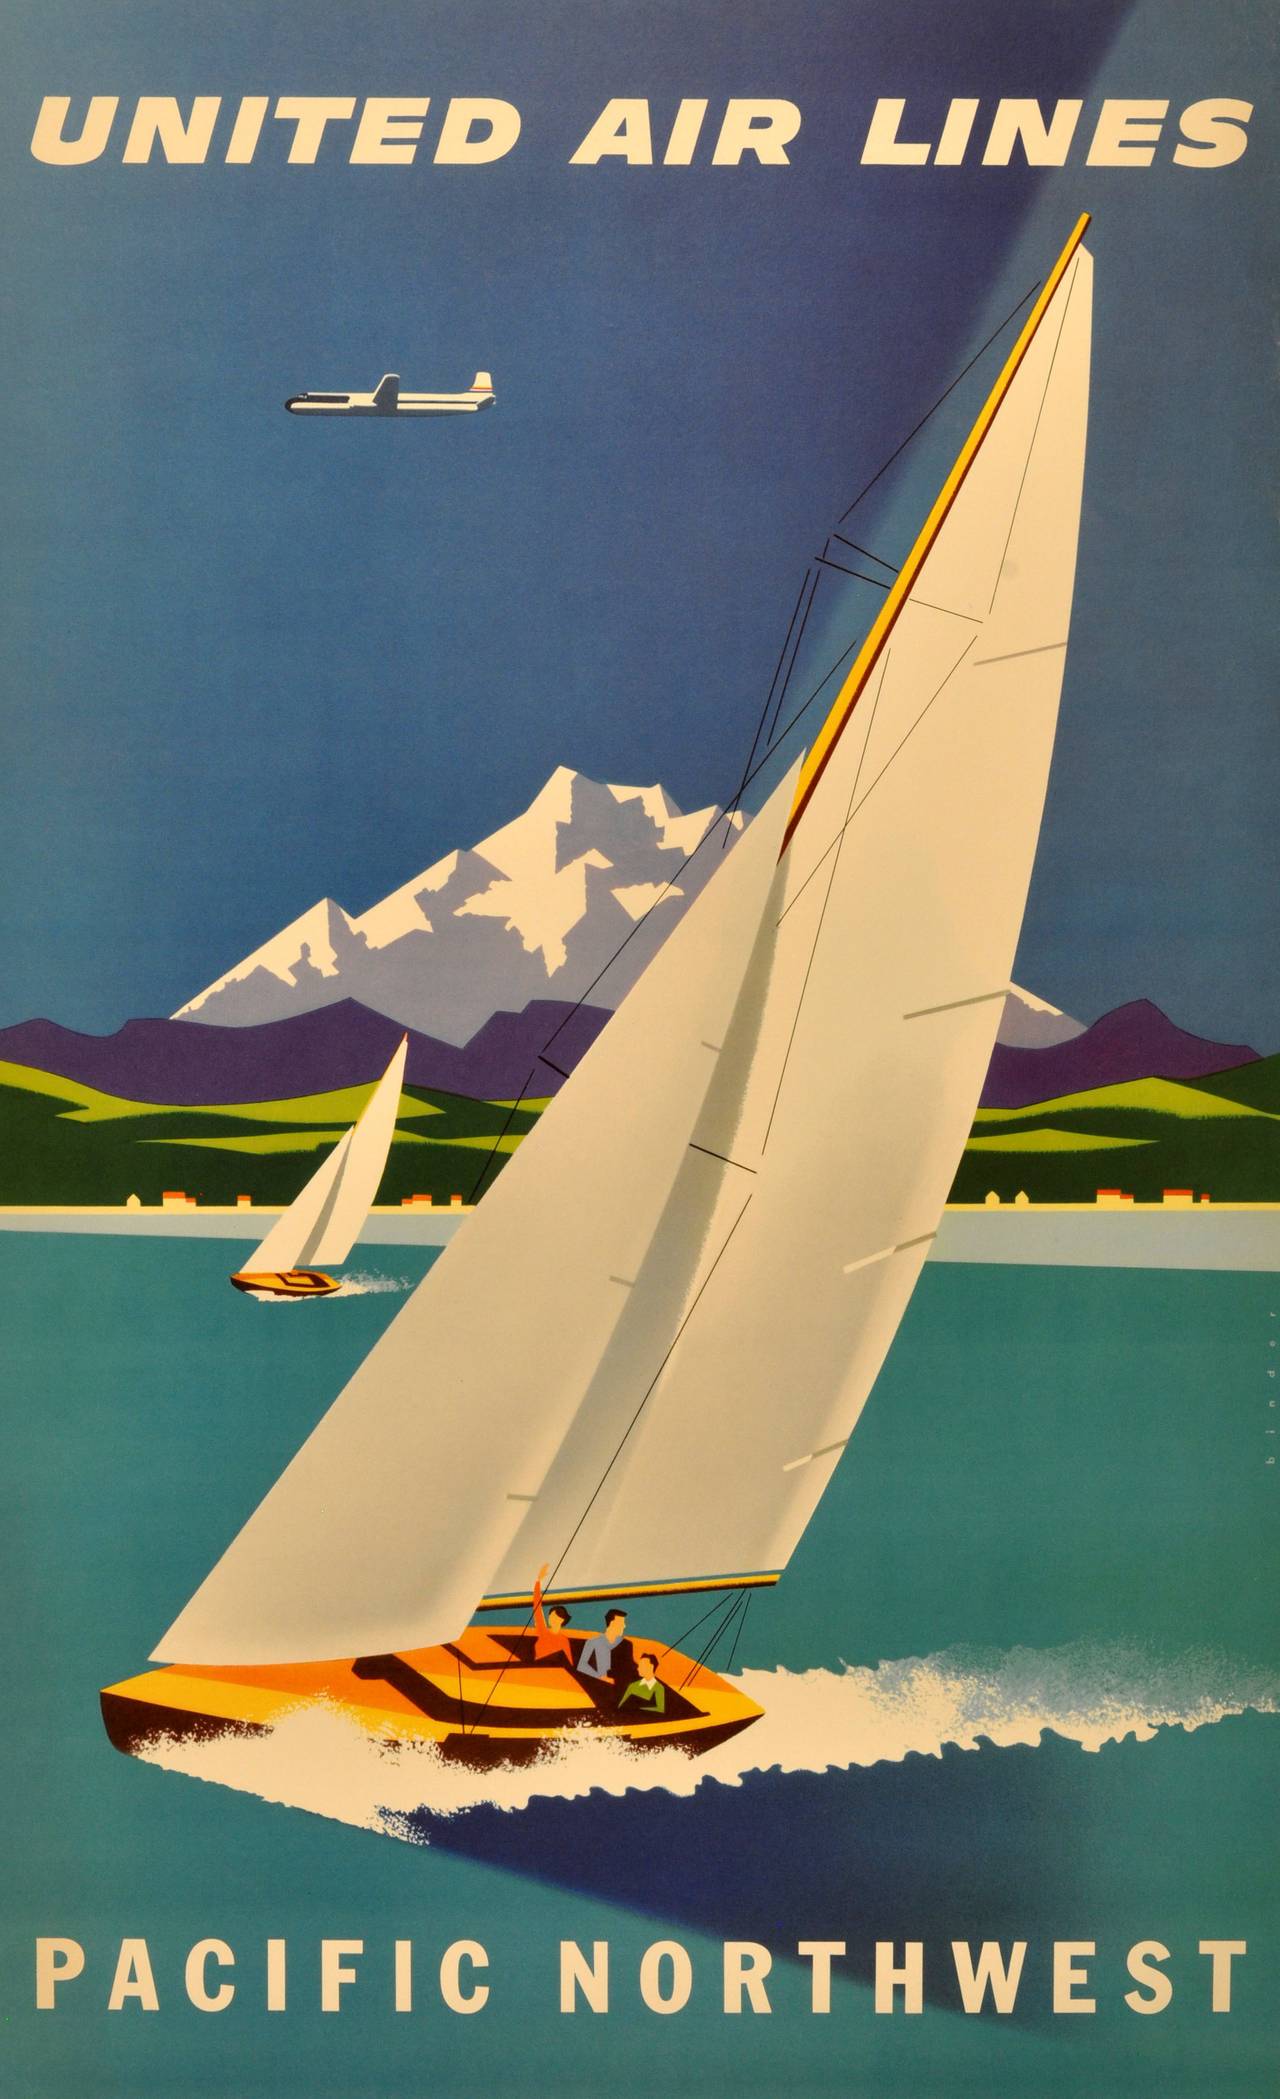 Joseph Binder Print - Original vintage travel advertising poster for United Airlines Pacific Northwest